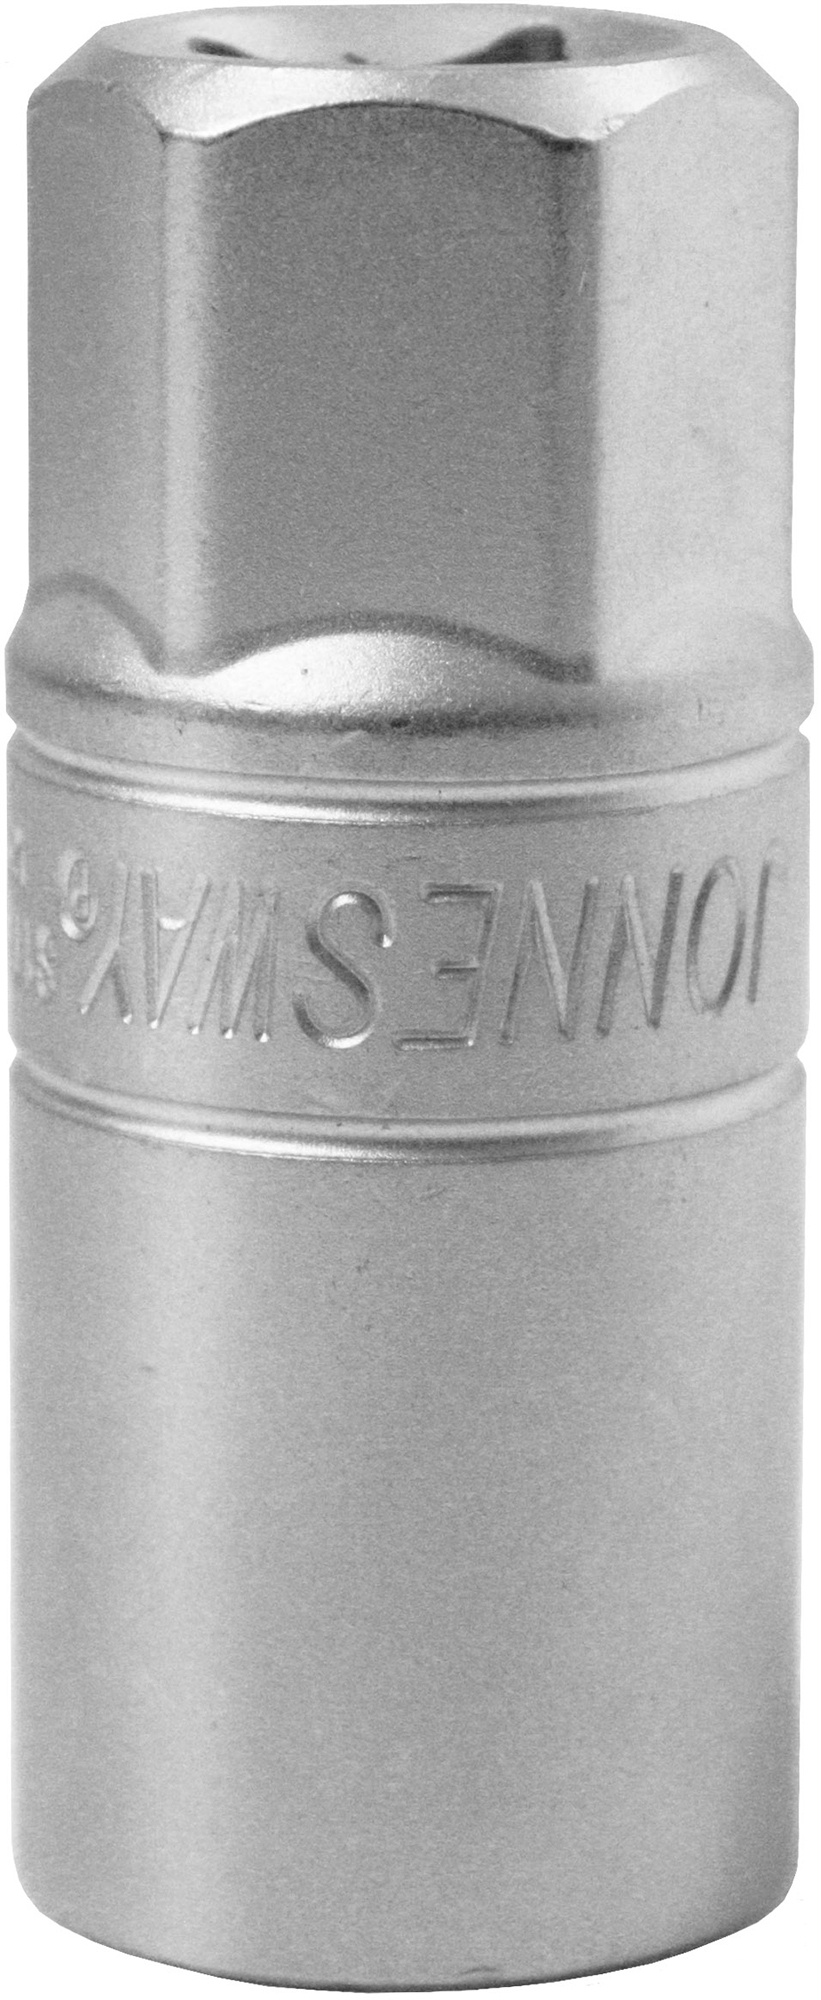   S17H4121 Головка торцевая свечная 1/2"DR, 21 мм 